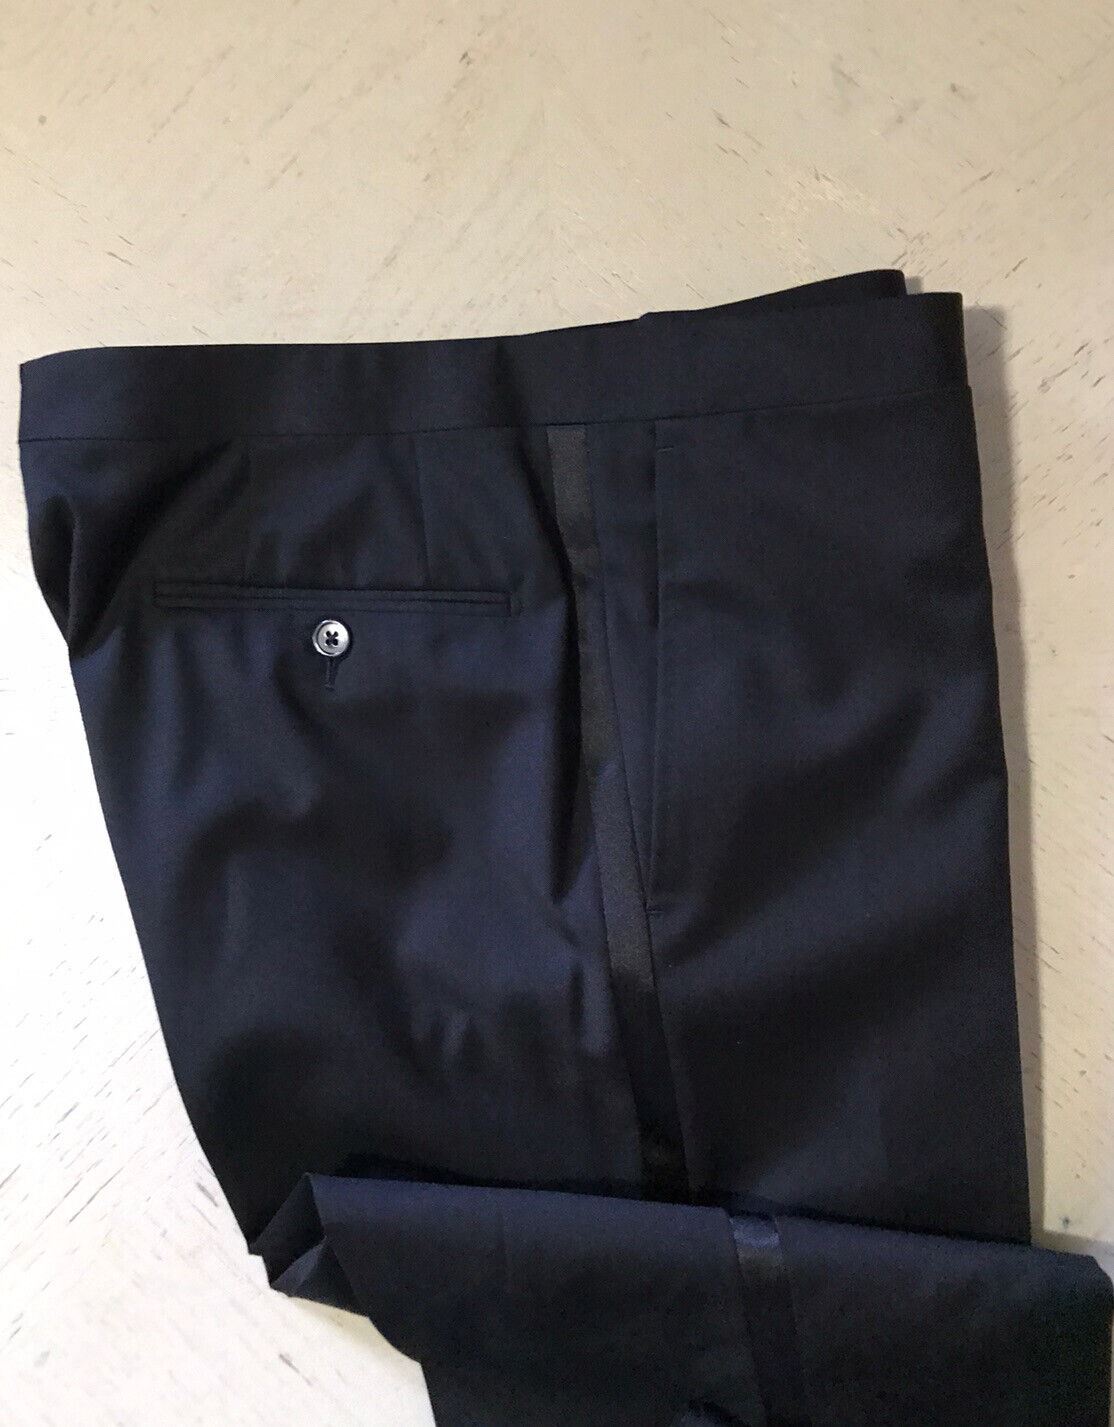 New $2895 Corneliani Mens Wool Tuxedo Suit Black 40L US ( 50L Eu ) Italy